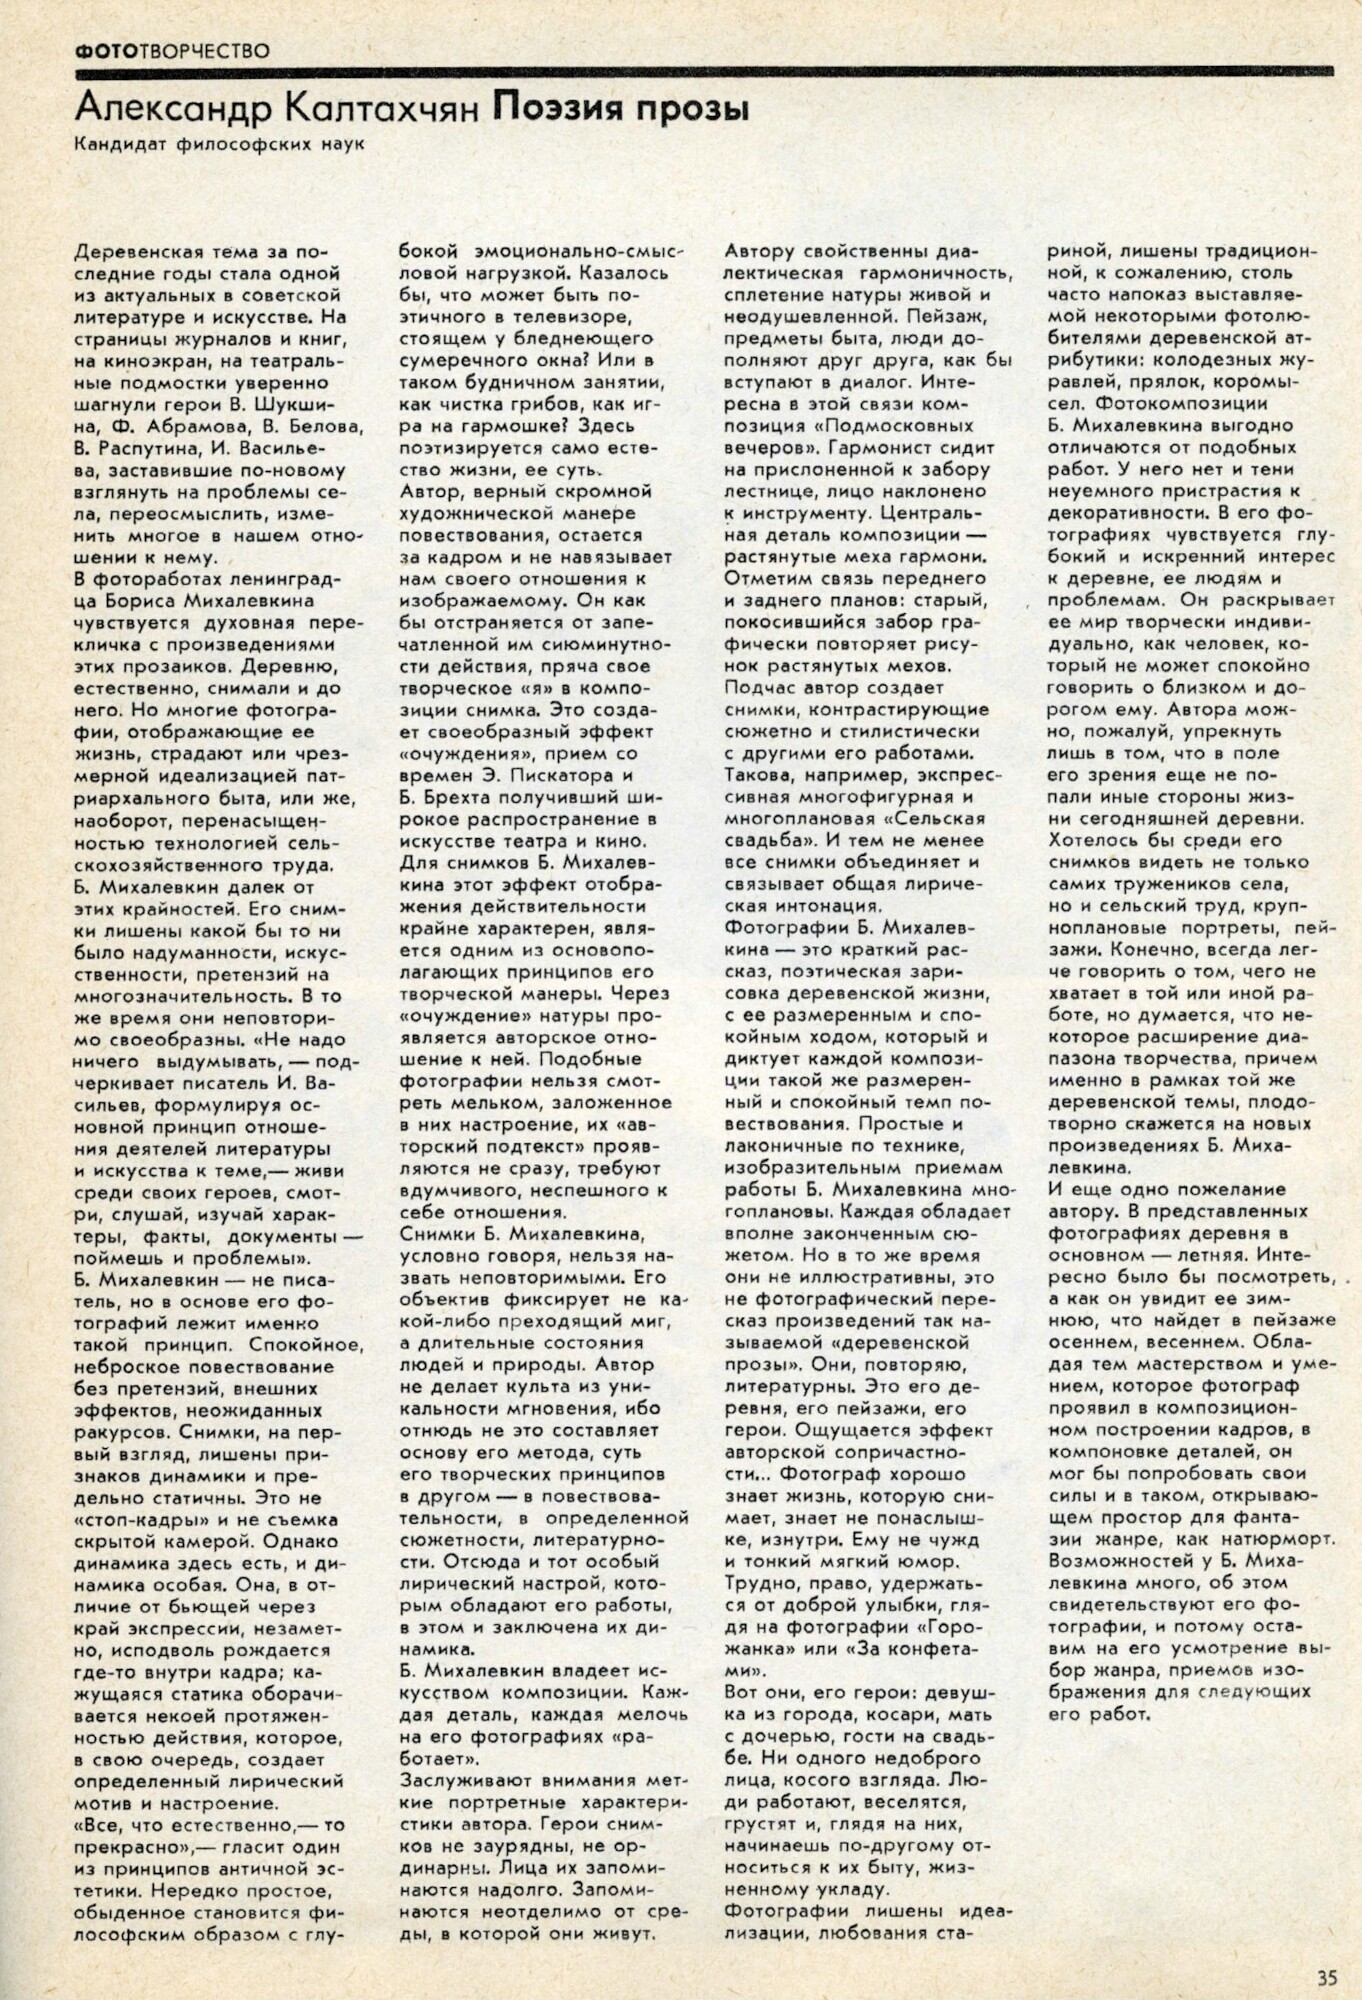 Журнал “Советское фото” 1982, No9. 
 

«Поэзия прозы»  

Александр Калтахчян
 